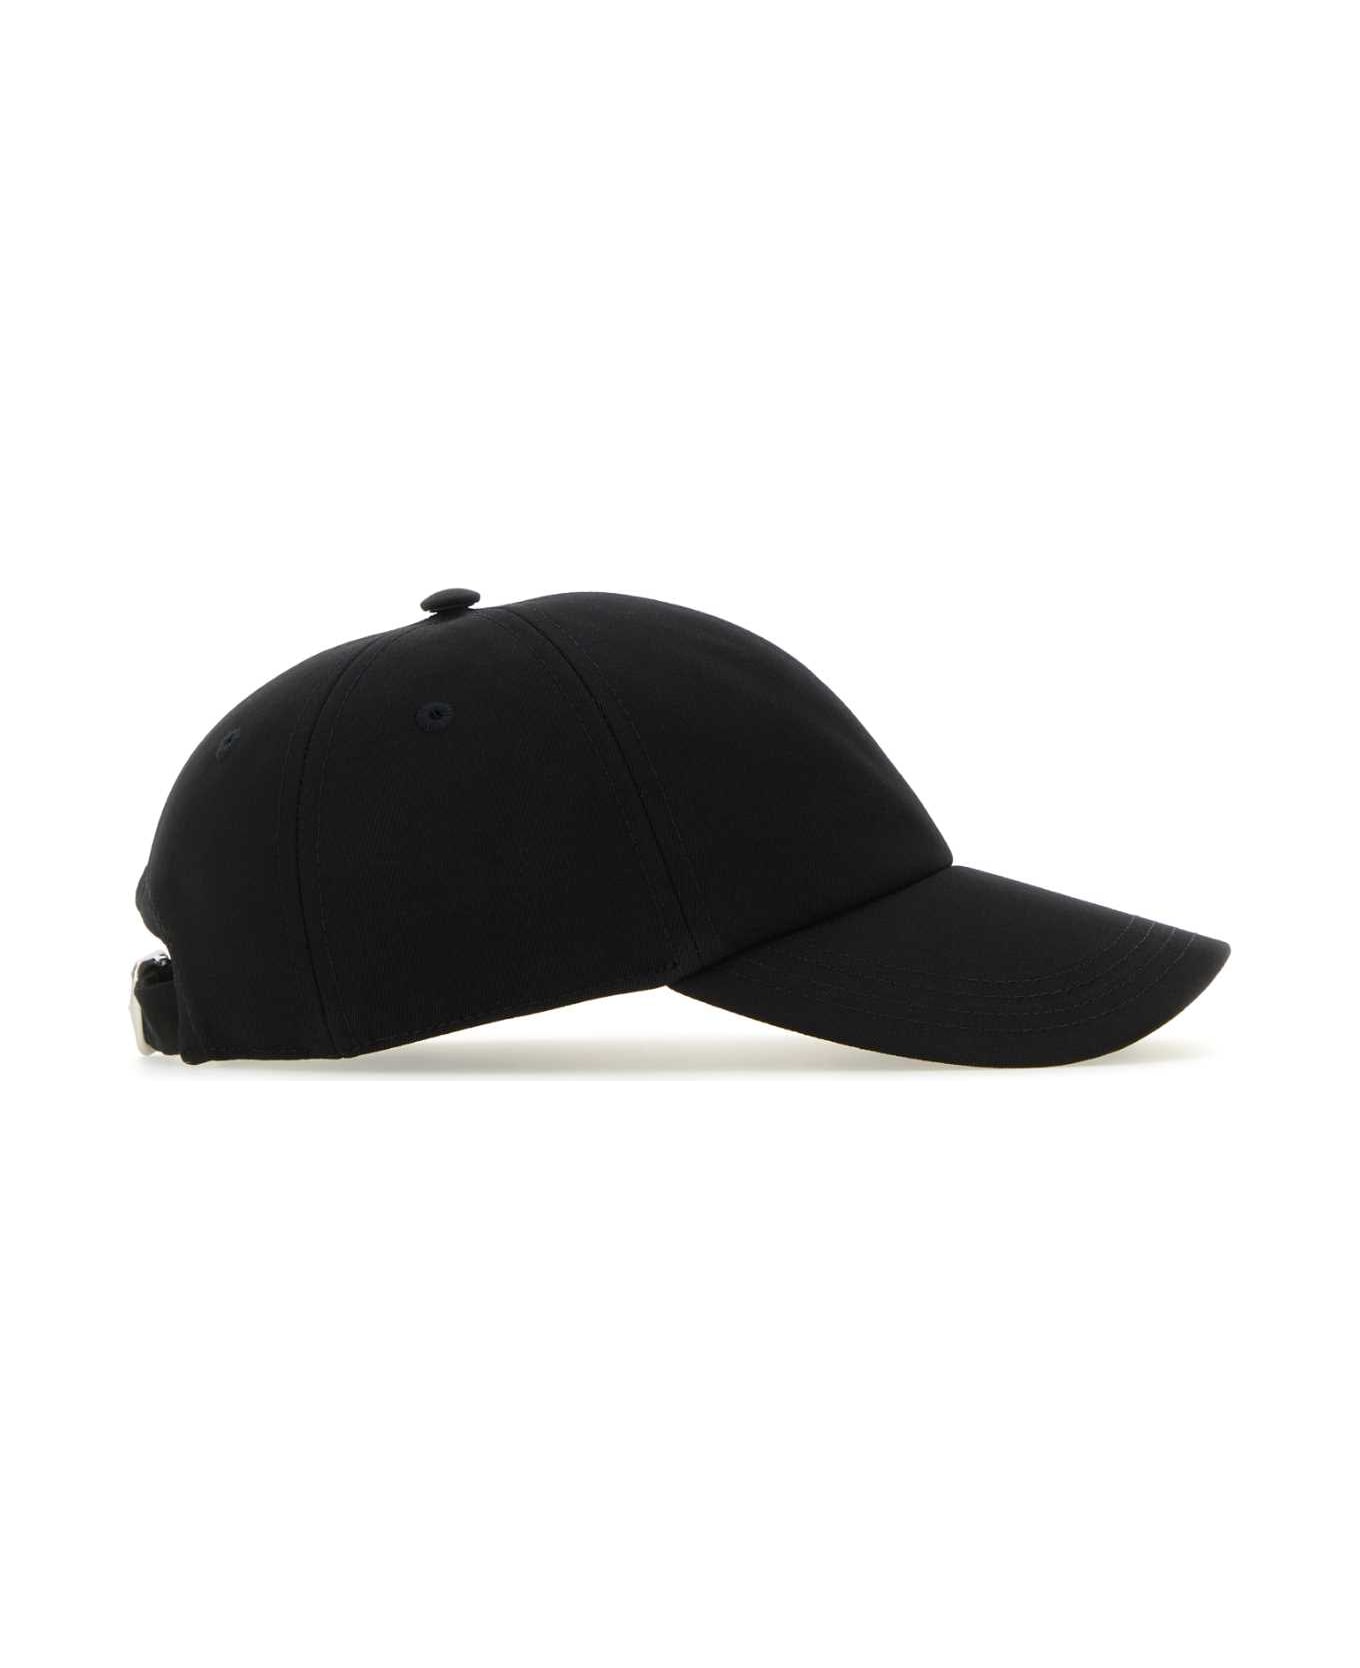 Burberry Black Polyester Blend Baseball Cap - BLACK